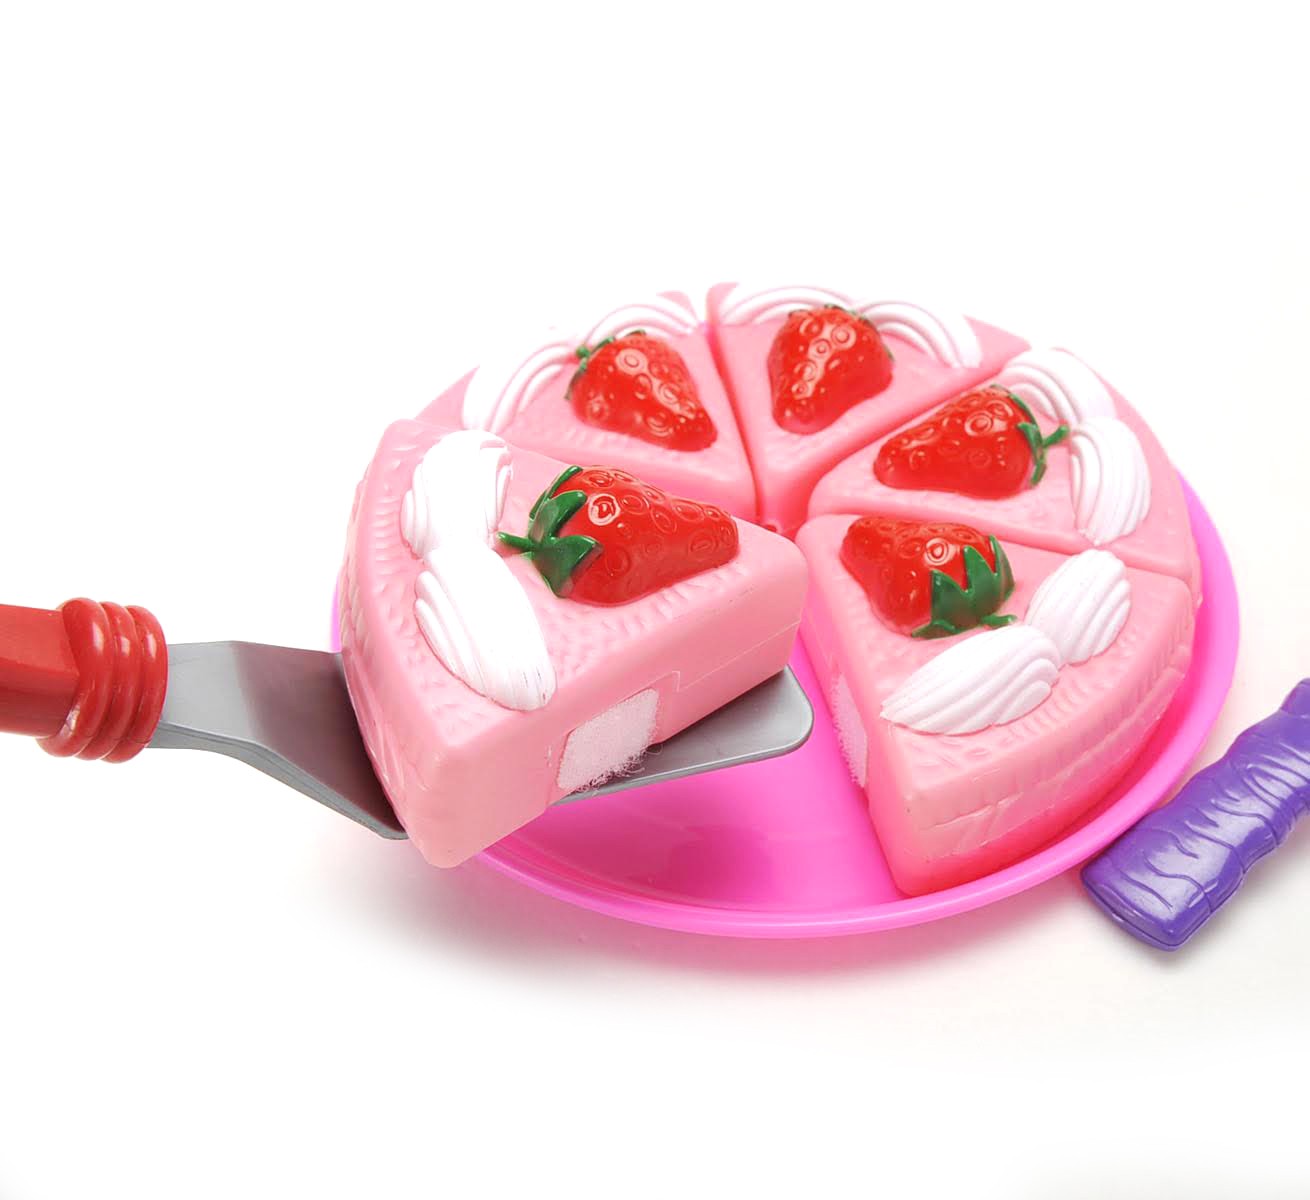 Strawberry Cake Dessert Play Set Toy